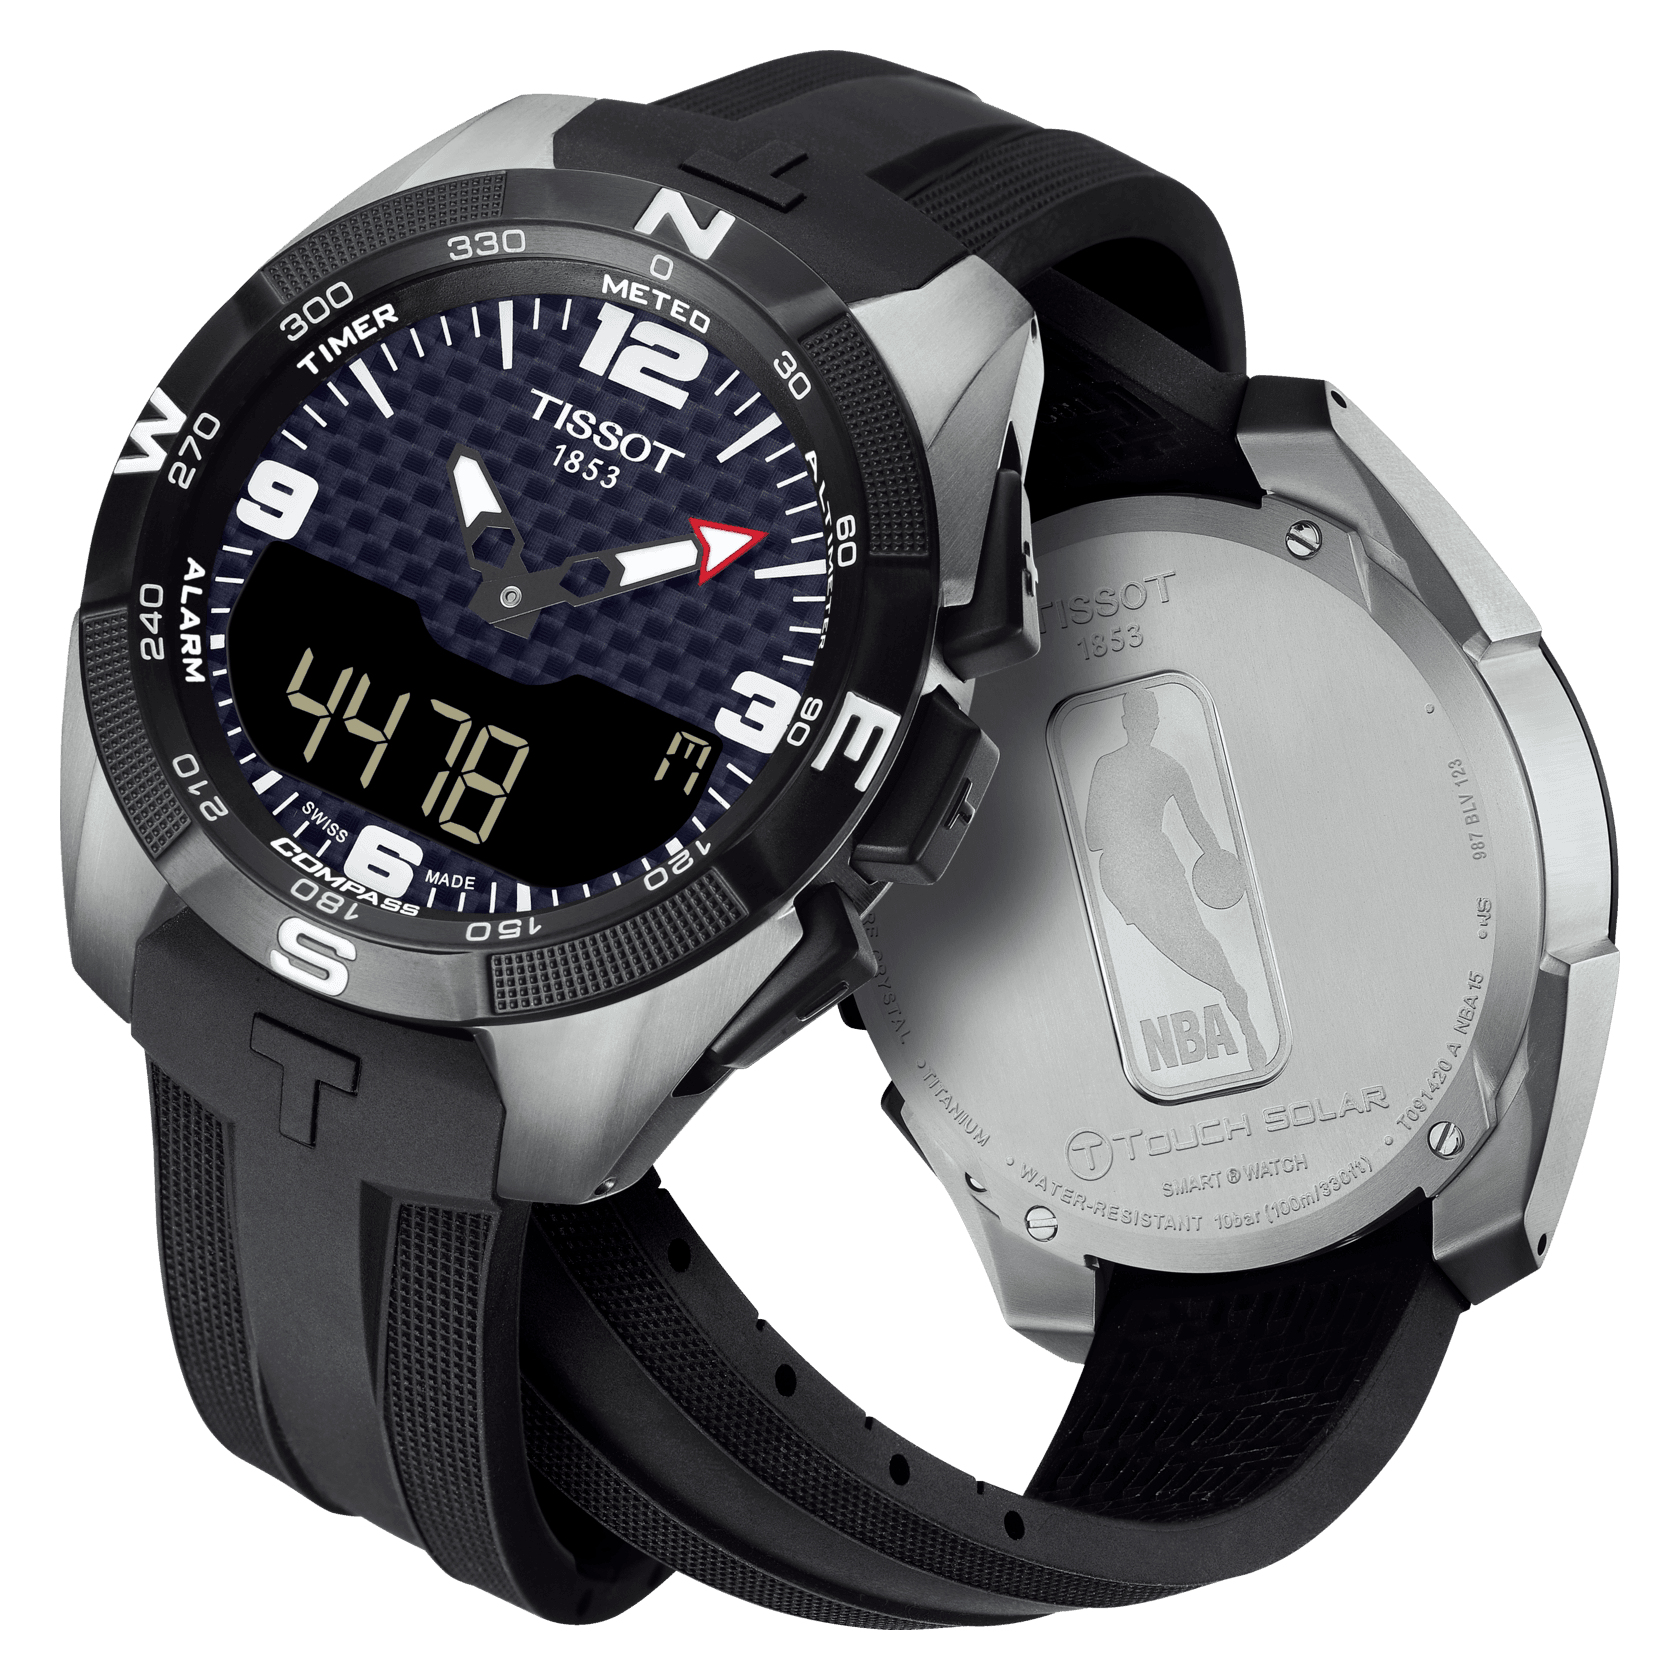 Best Replica Breitling Watches